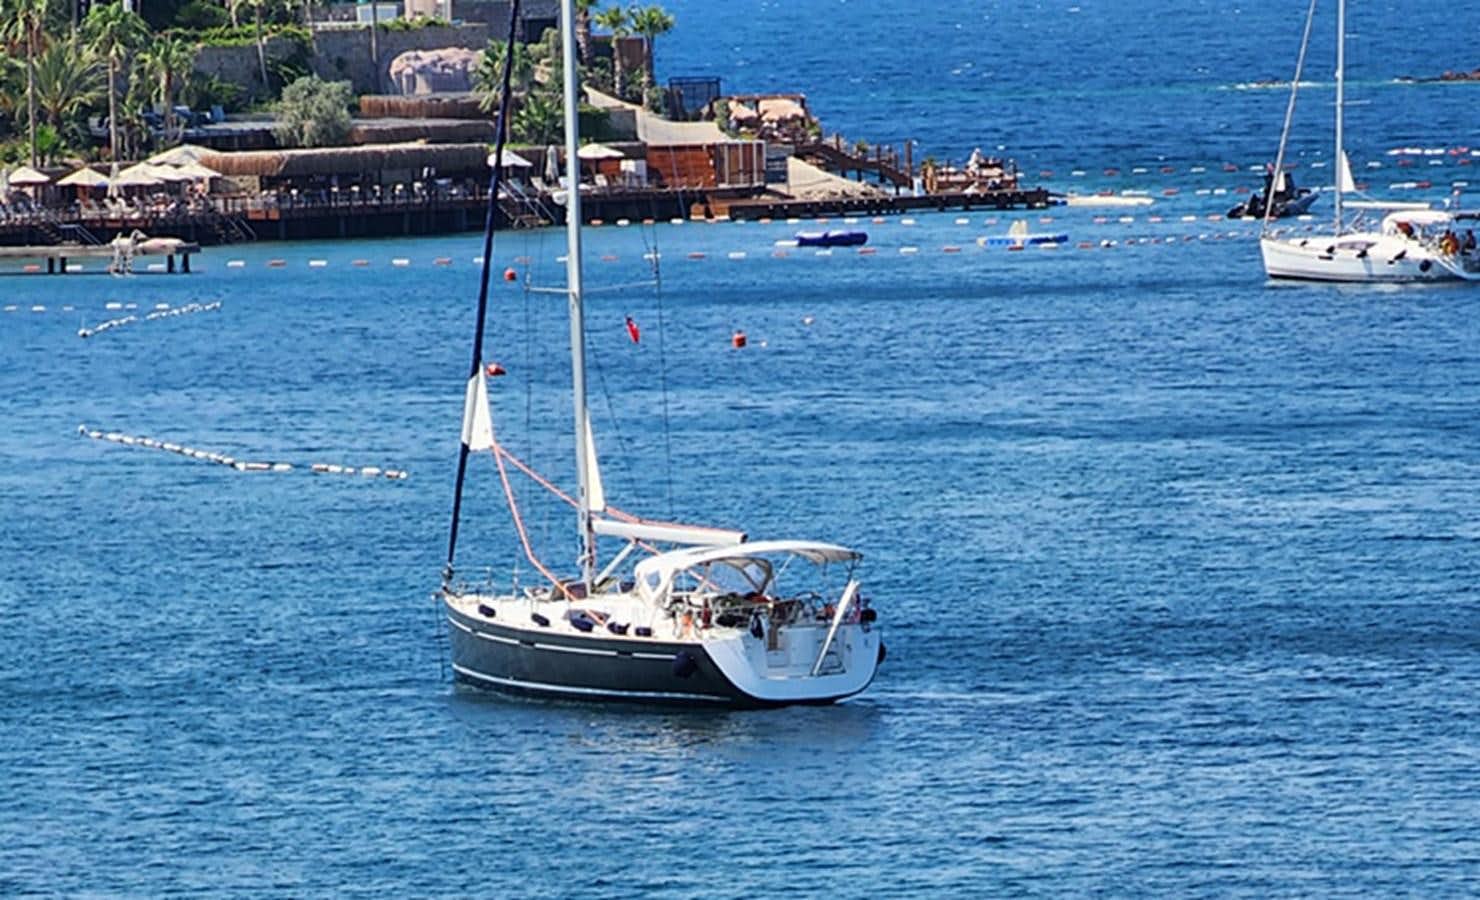 Beneteau oceanis 58
Yacht for Sale